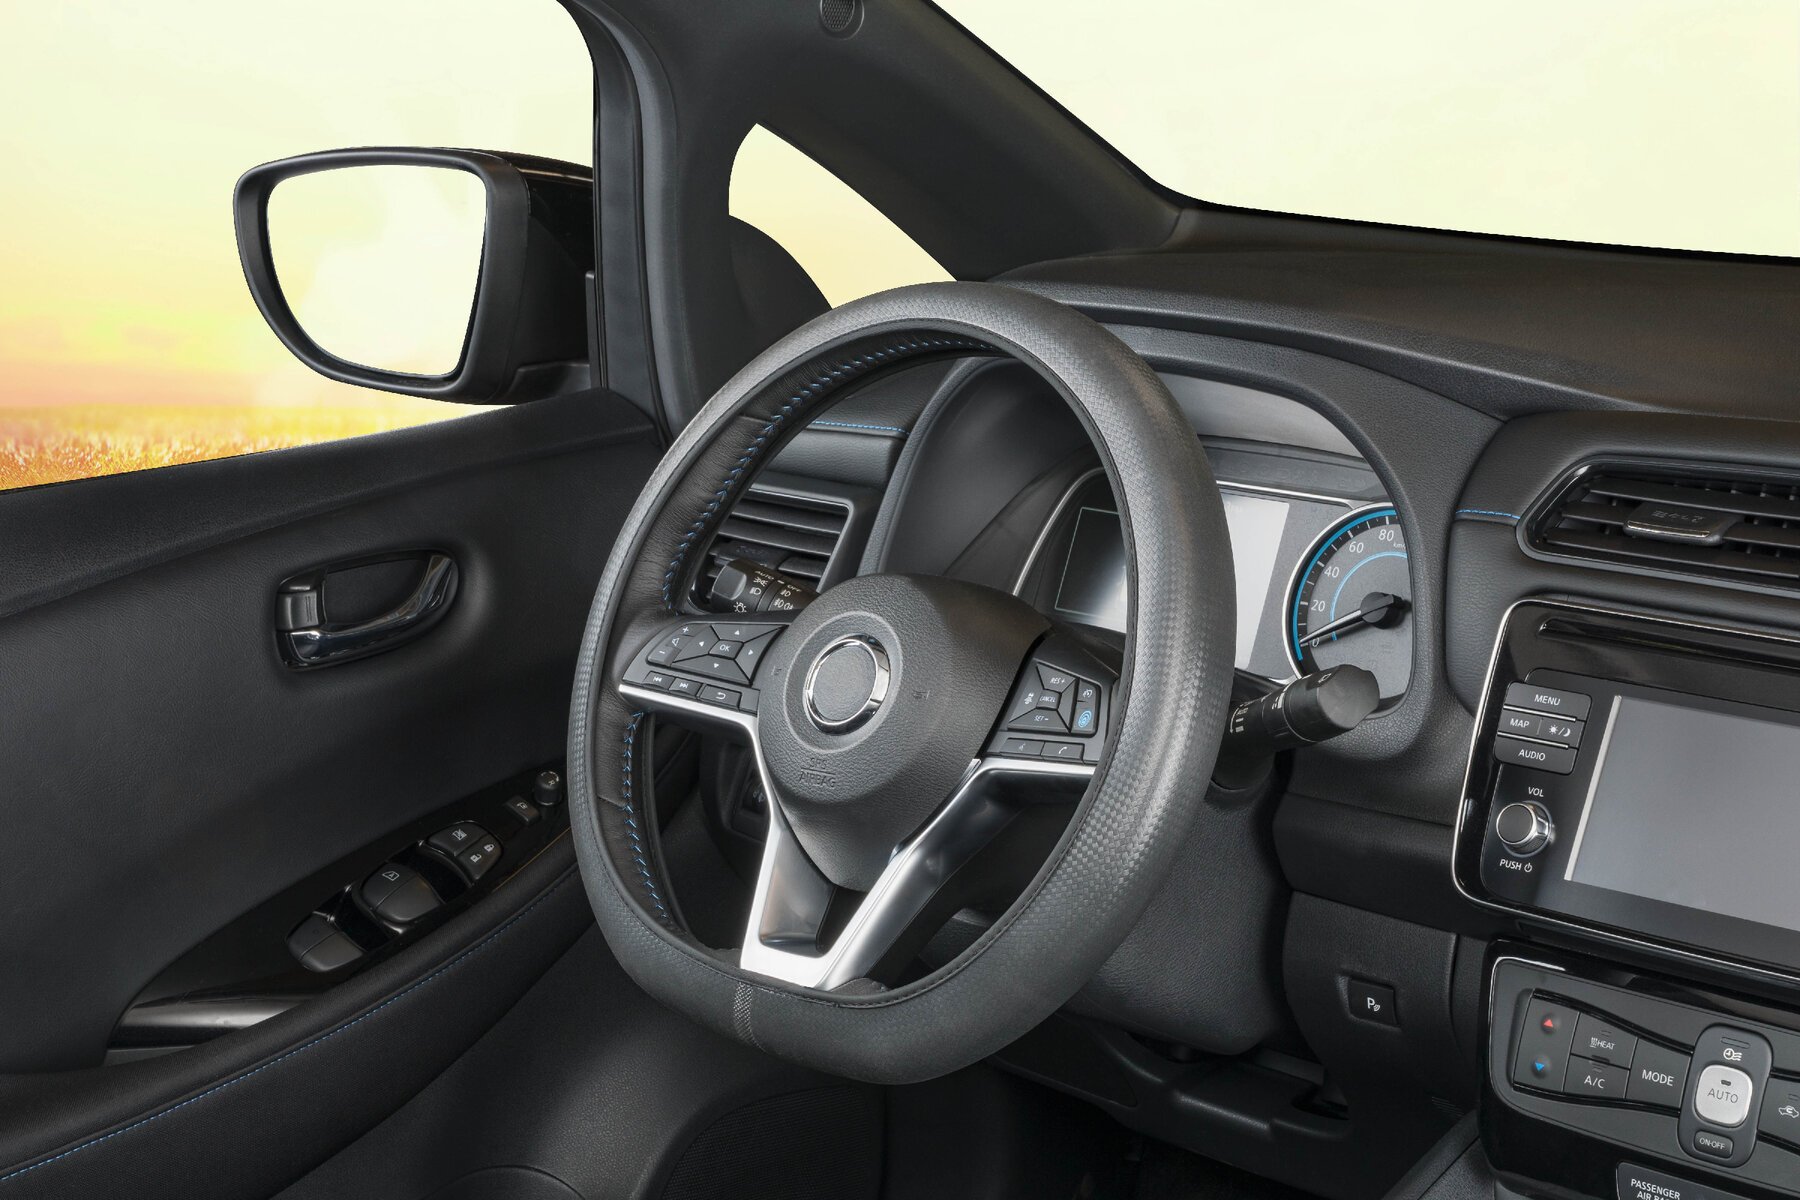 Steering wheel cover Soft Grip Carbon - 38 cm black